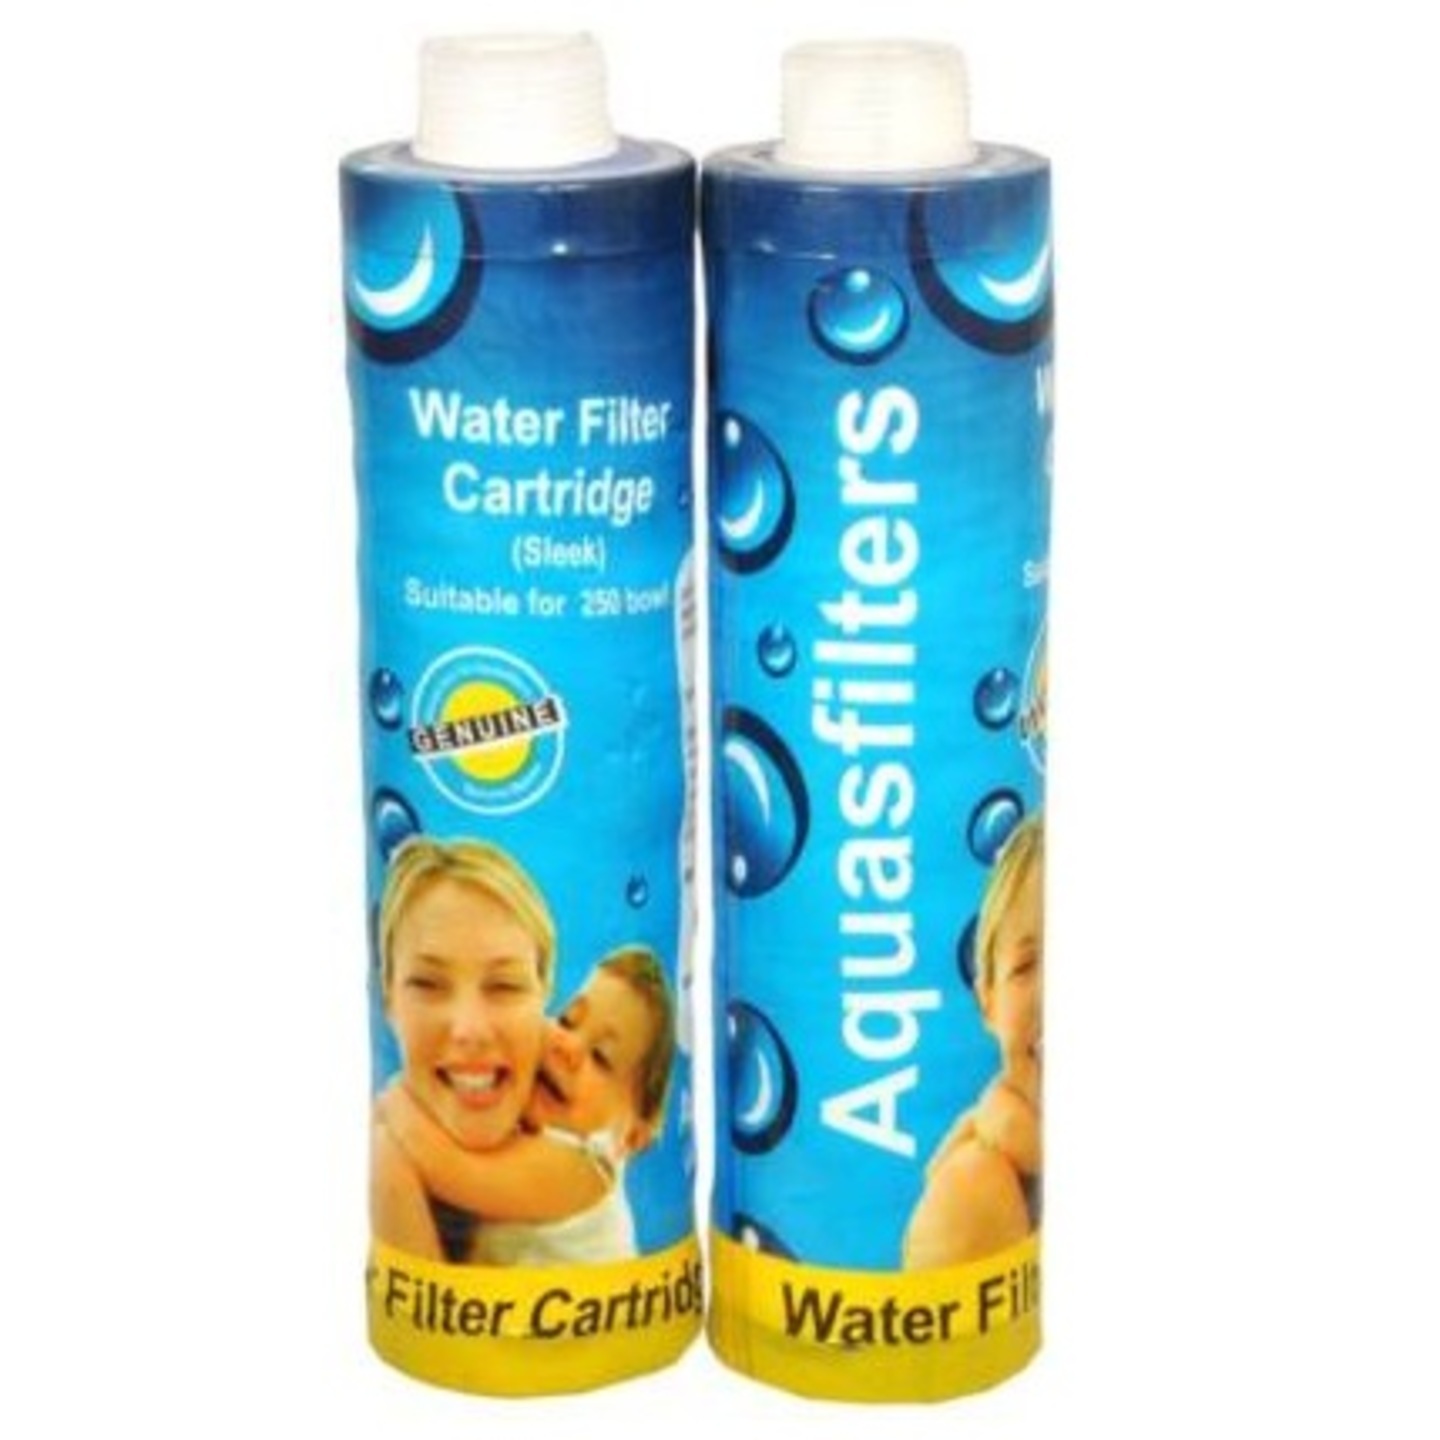 Aquafilter Water Filter Cartridge (1 piece)